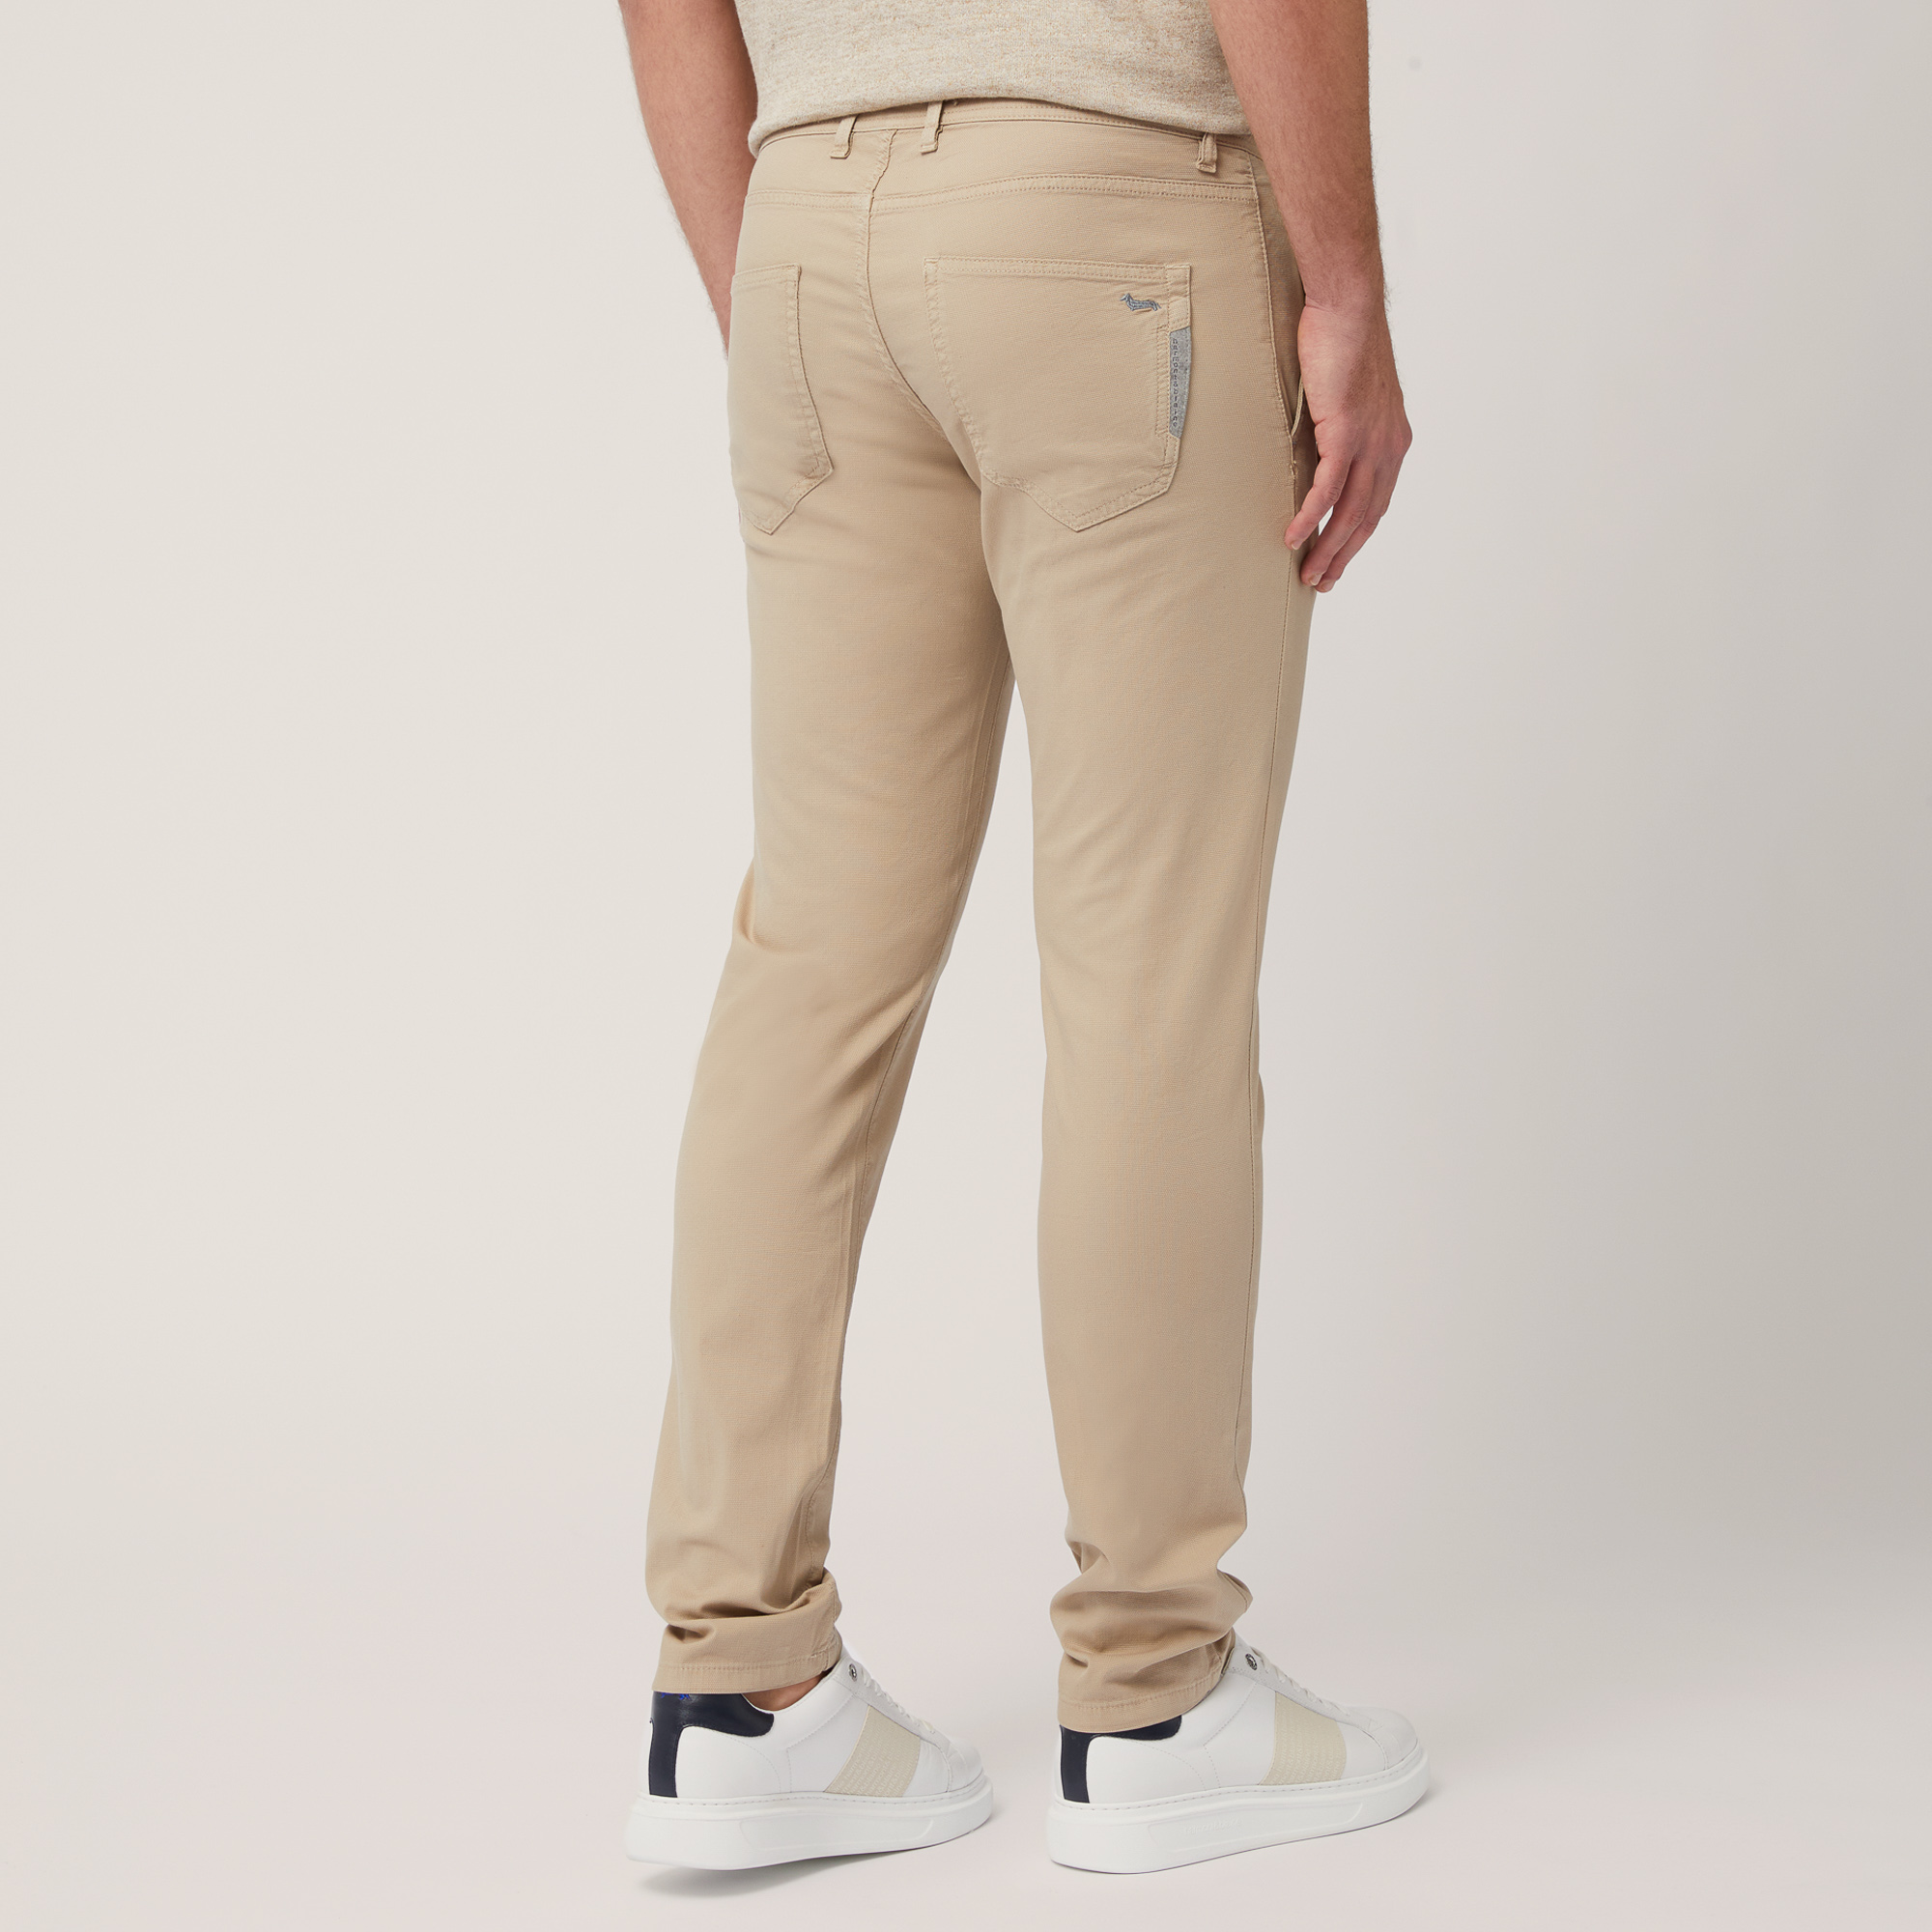 Pantaloni Colorfive, Beige, large image number 1